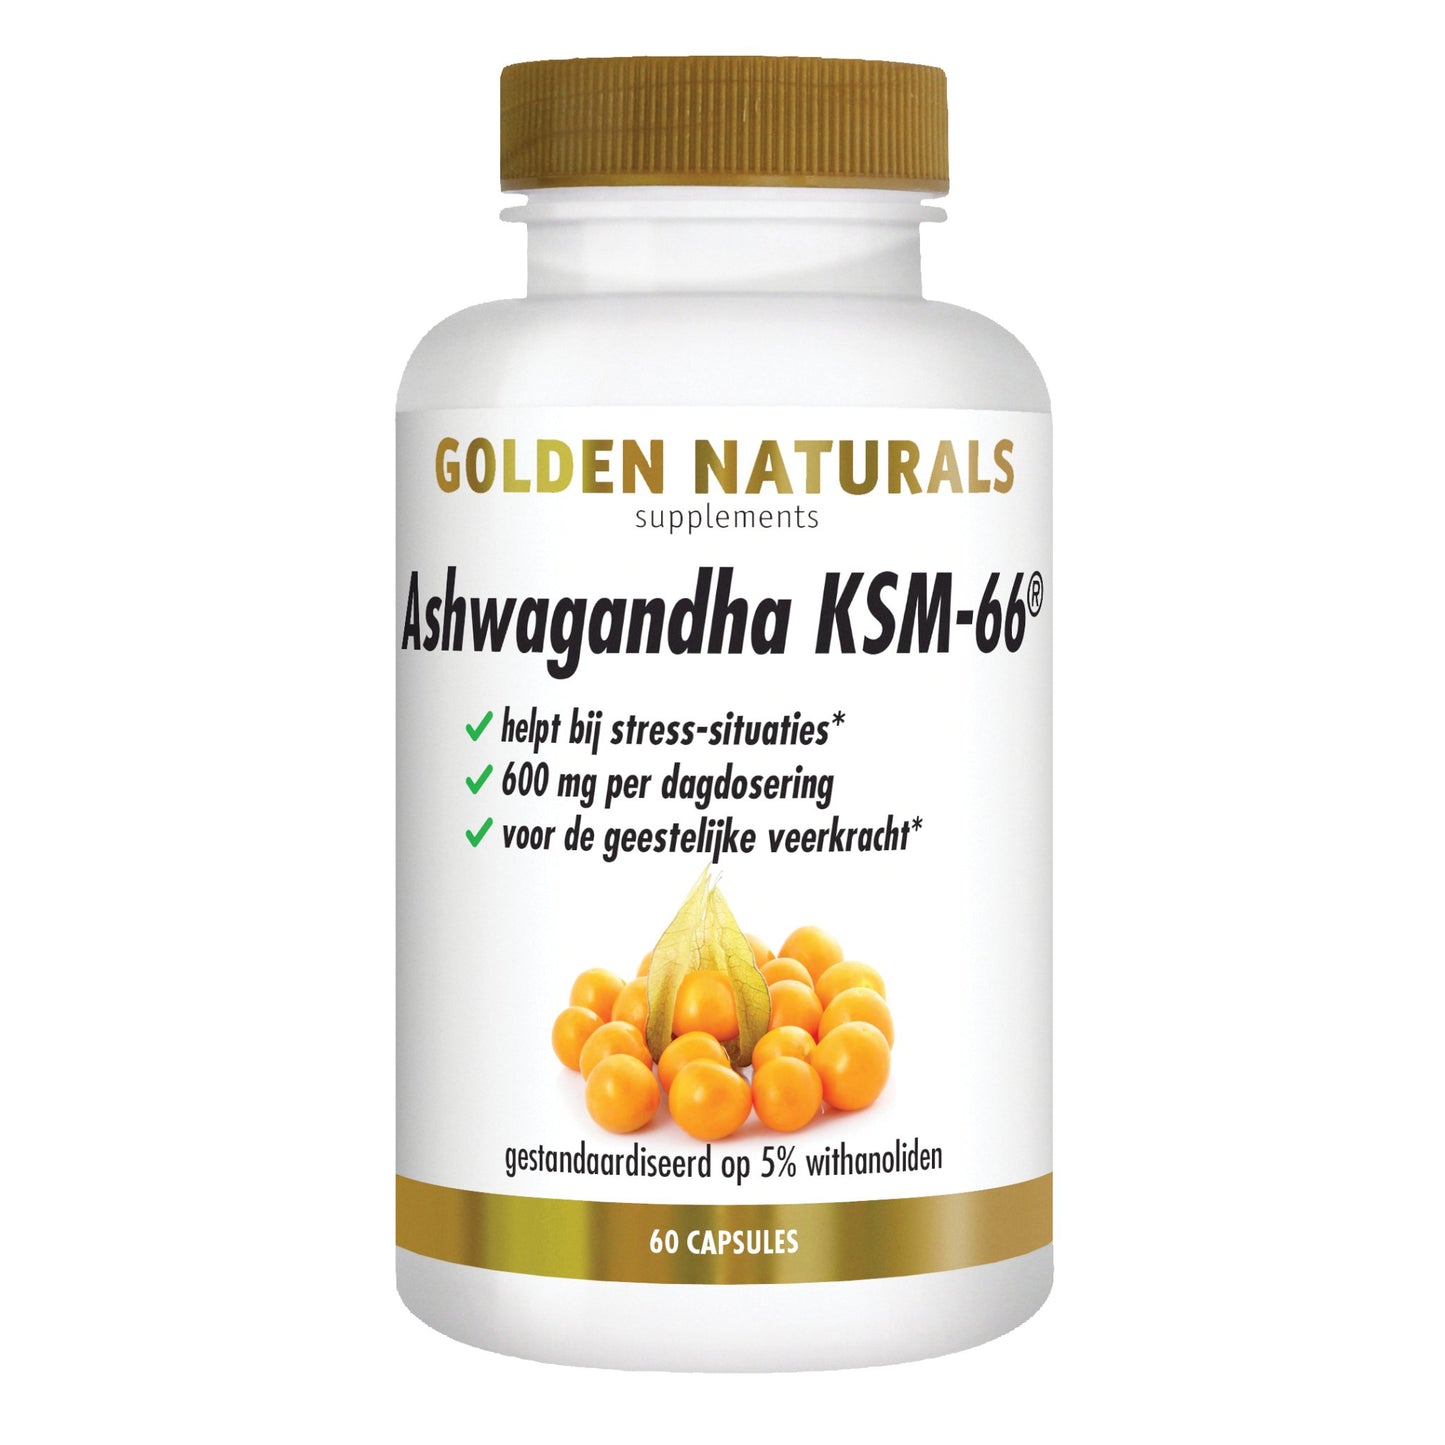 Ashwagandha KSM-66 - 60 - vegetarische capsules Supplement Golden Naturals   